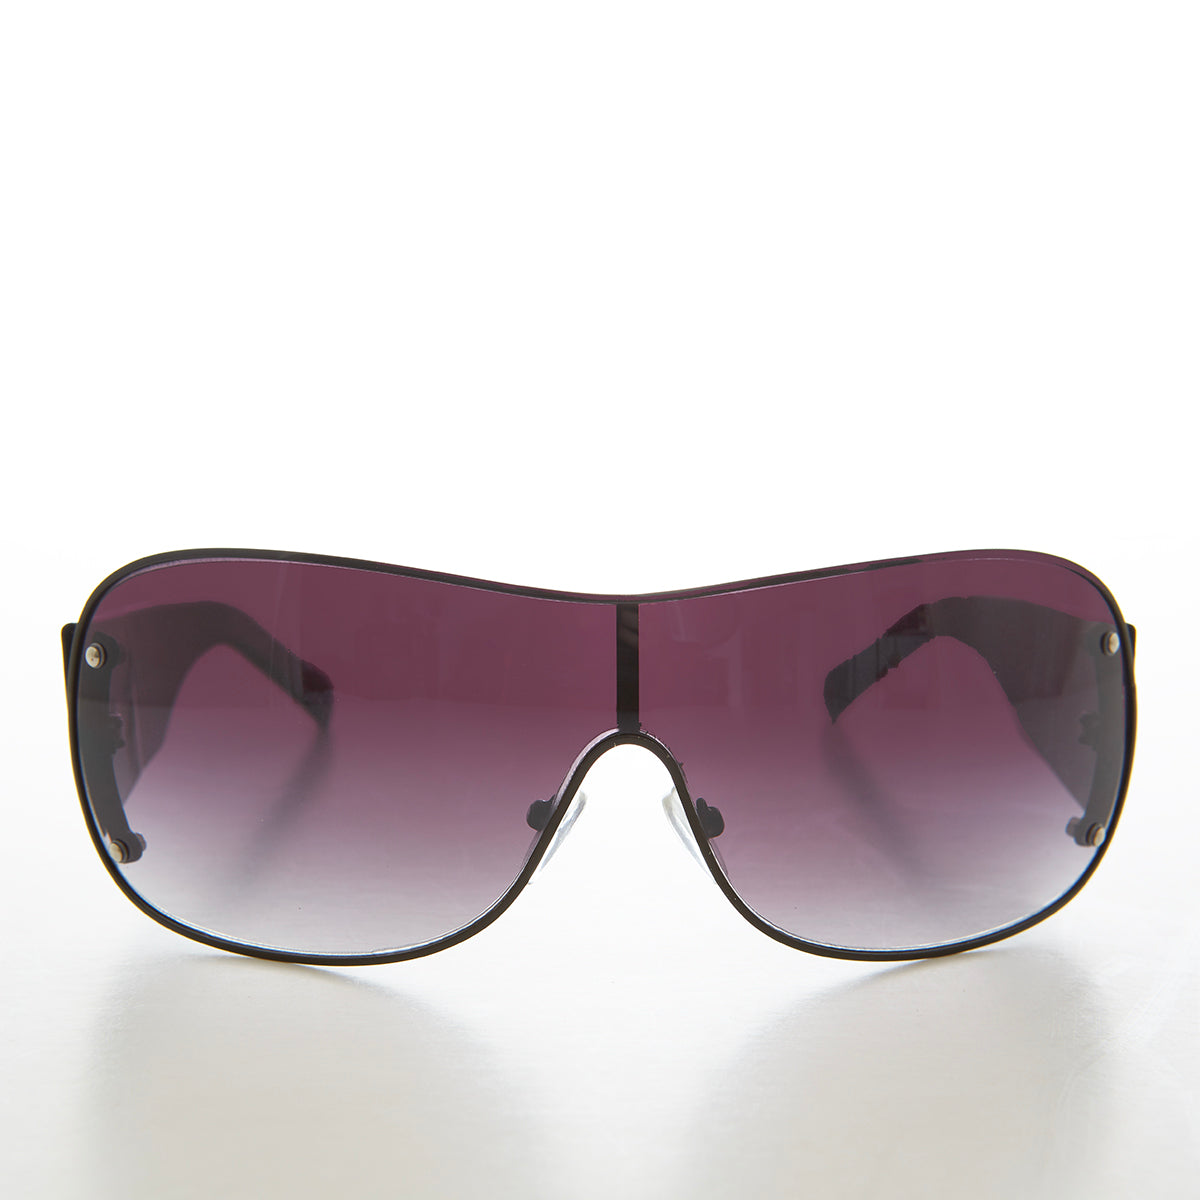 mono lens wrap around shield vintage sunglasses